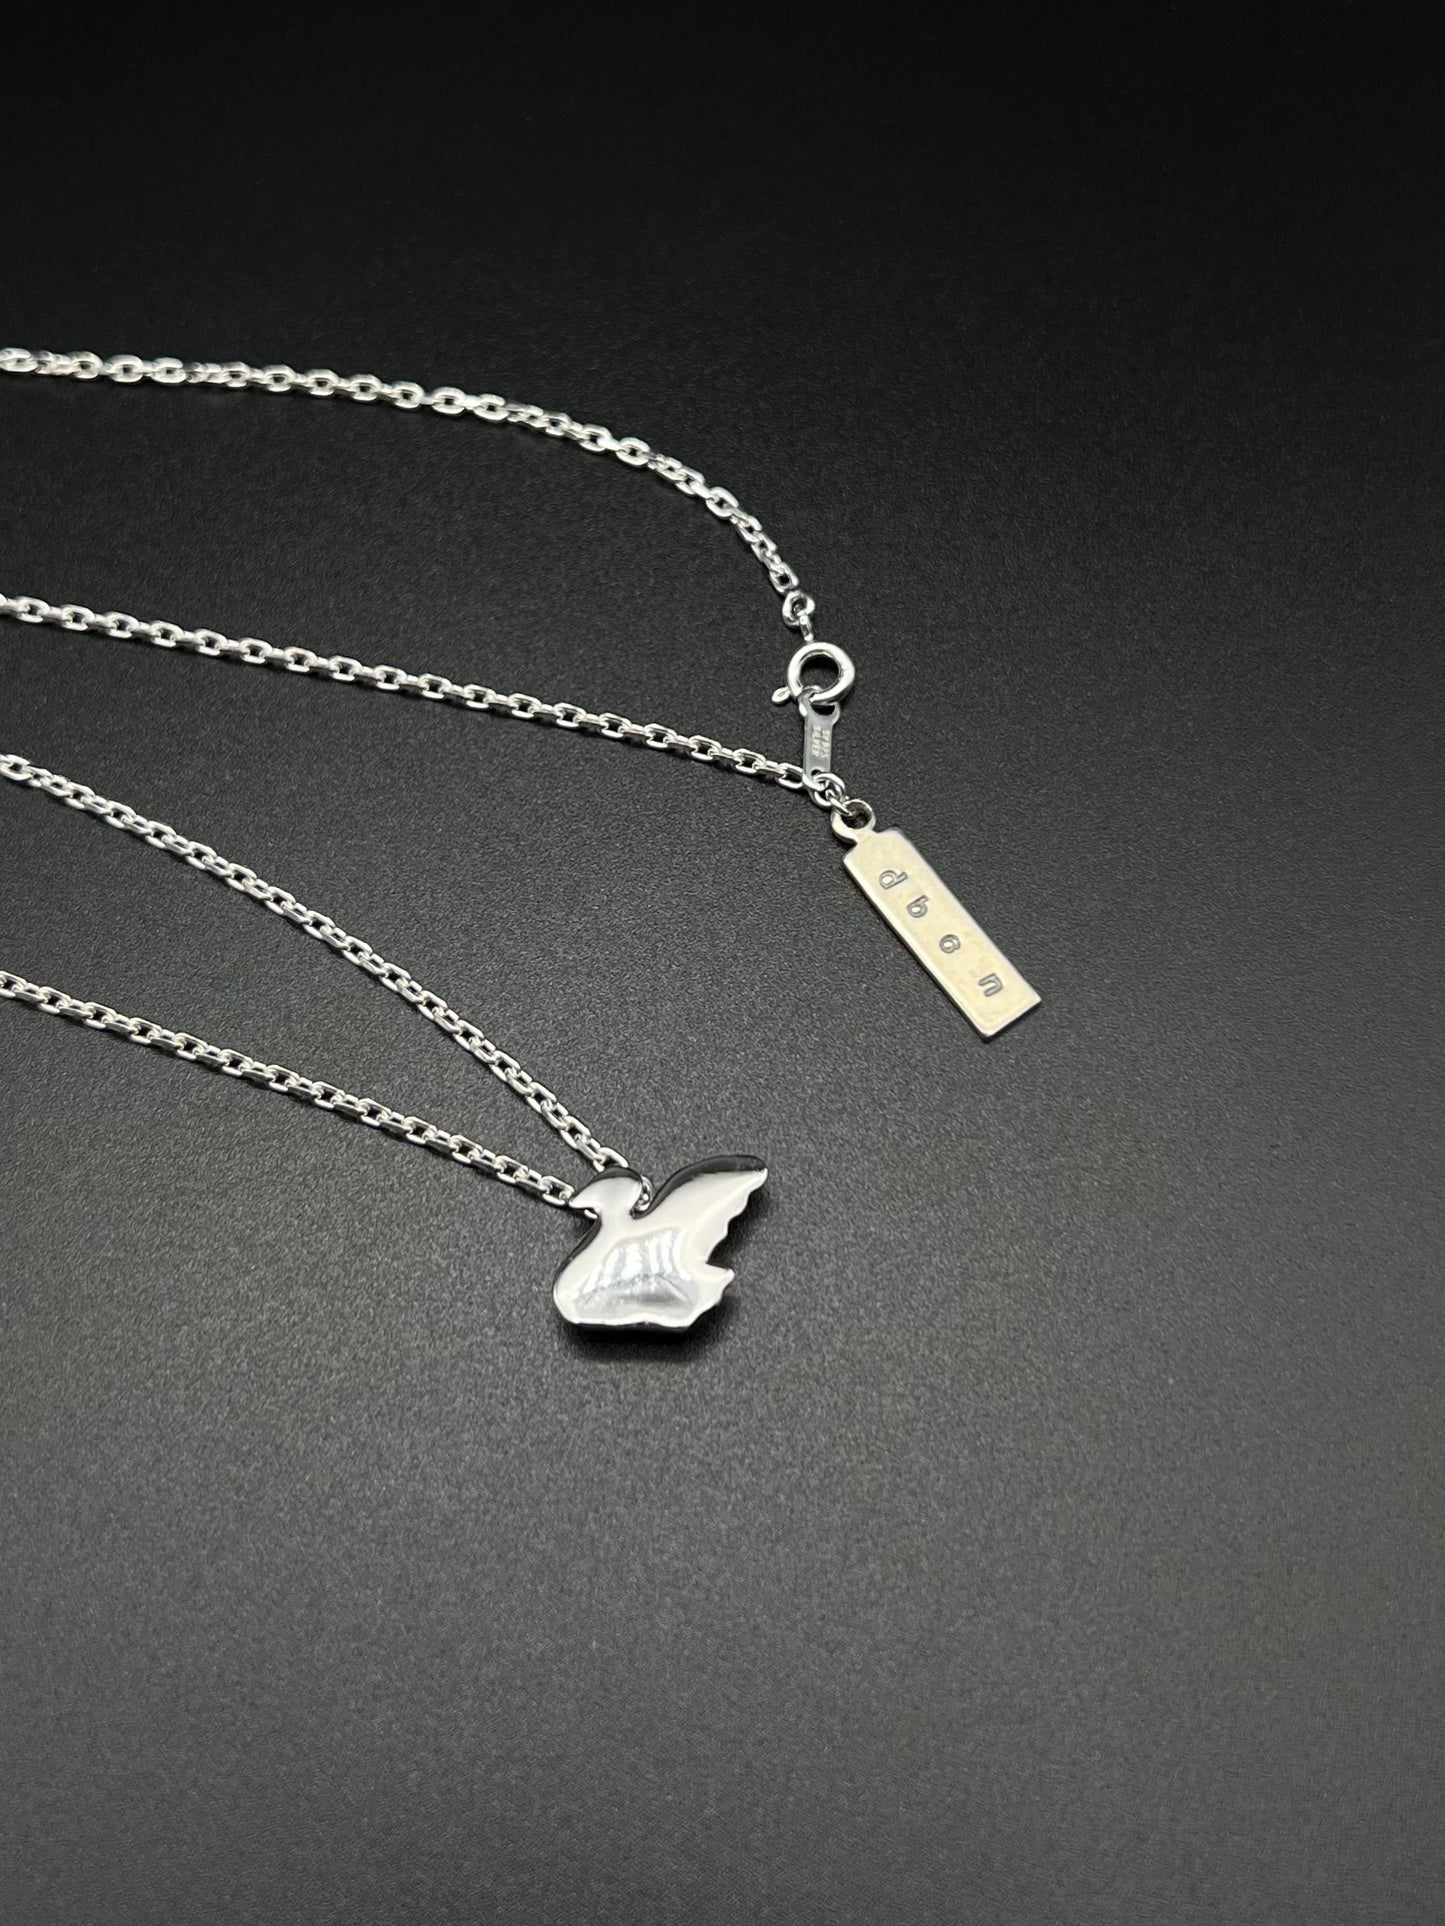 Swan necklace -silver925